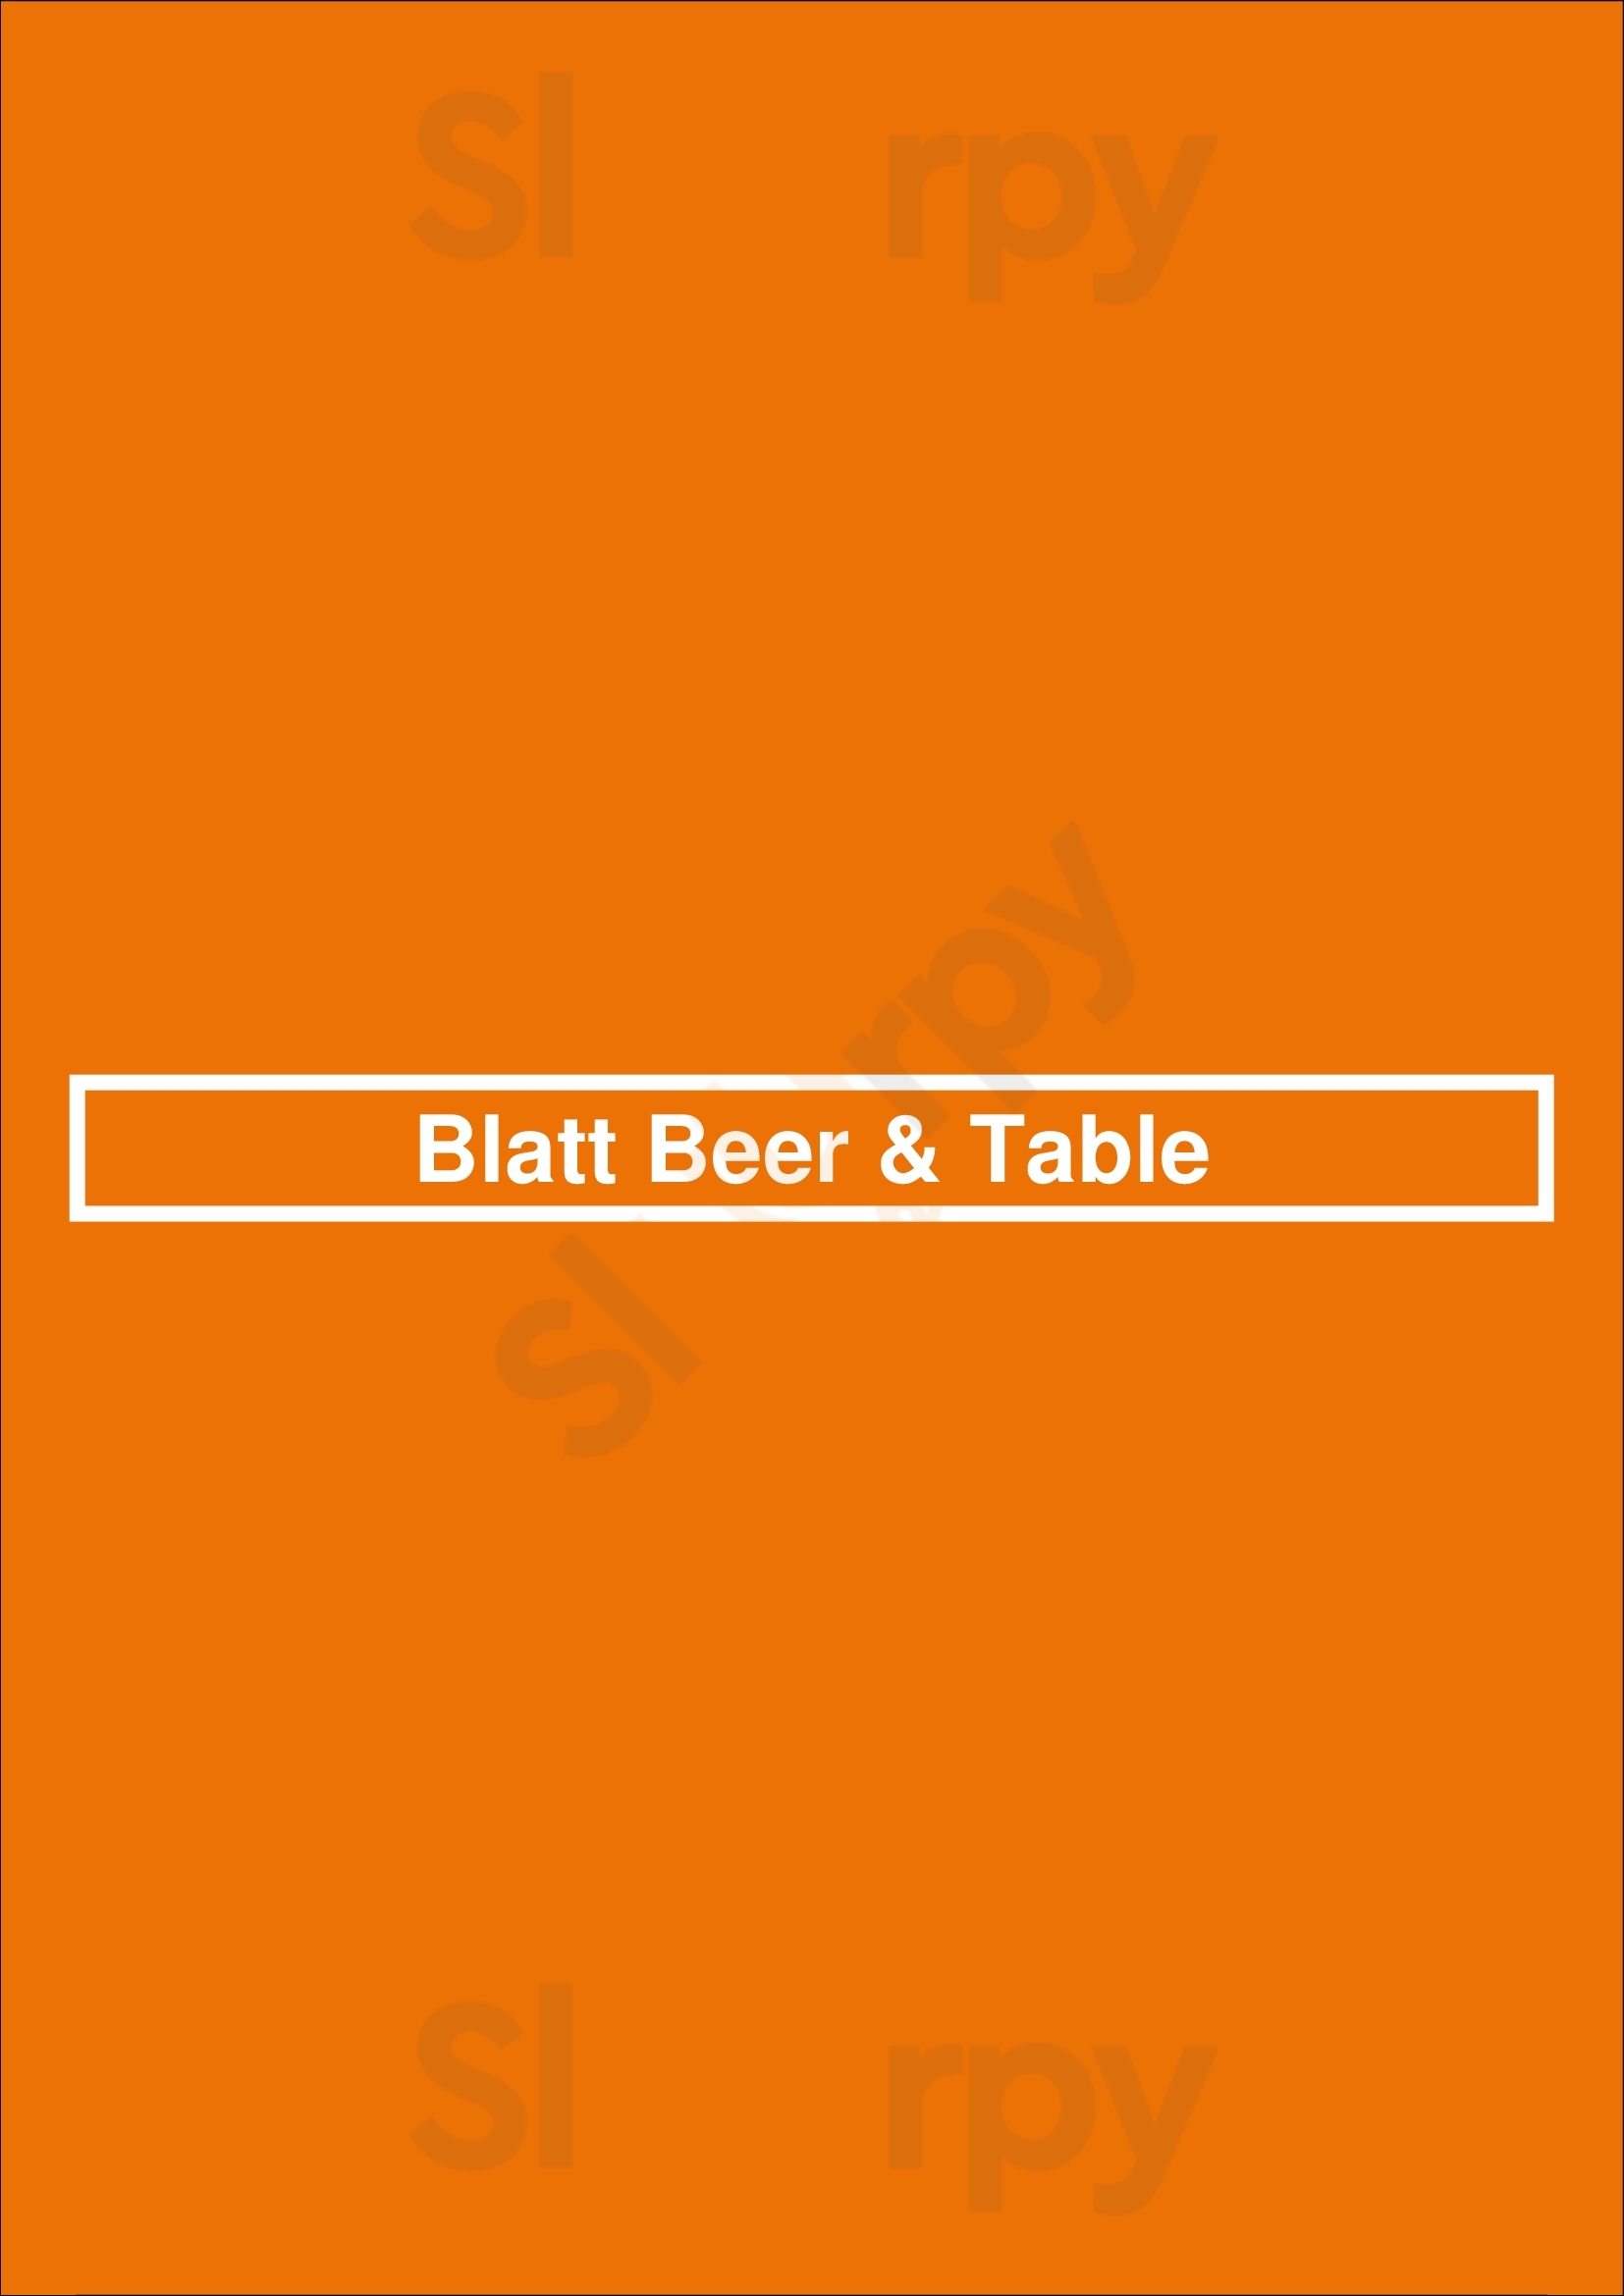 Blatt Beer & Table Dallas Menu - 1